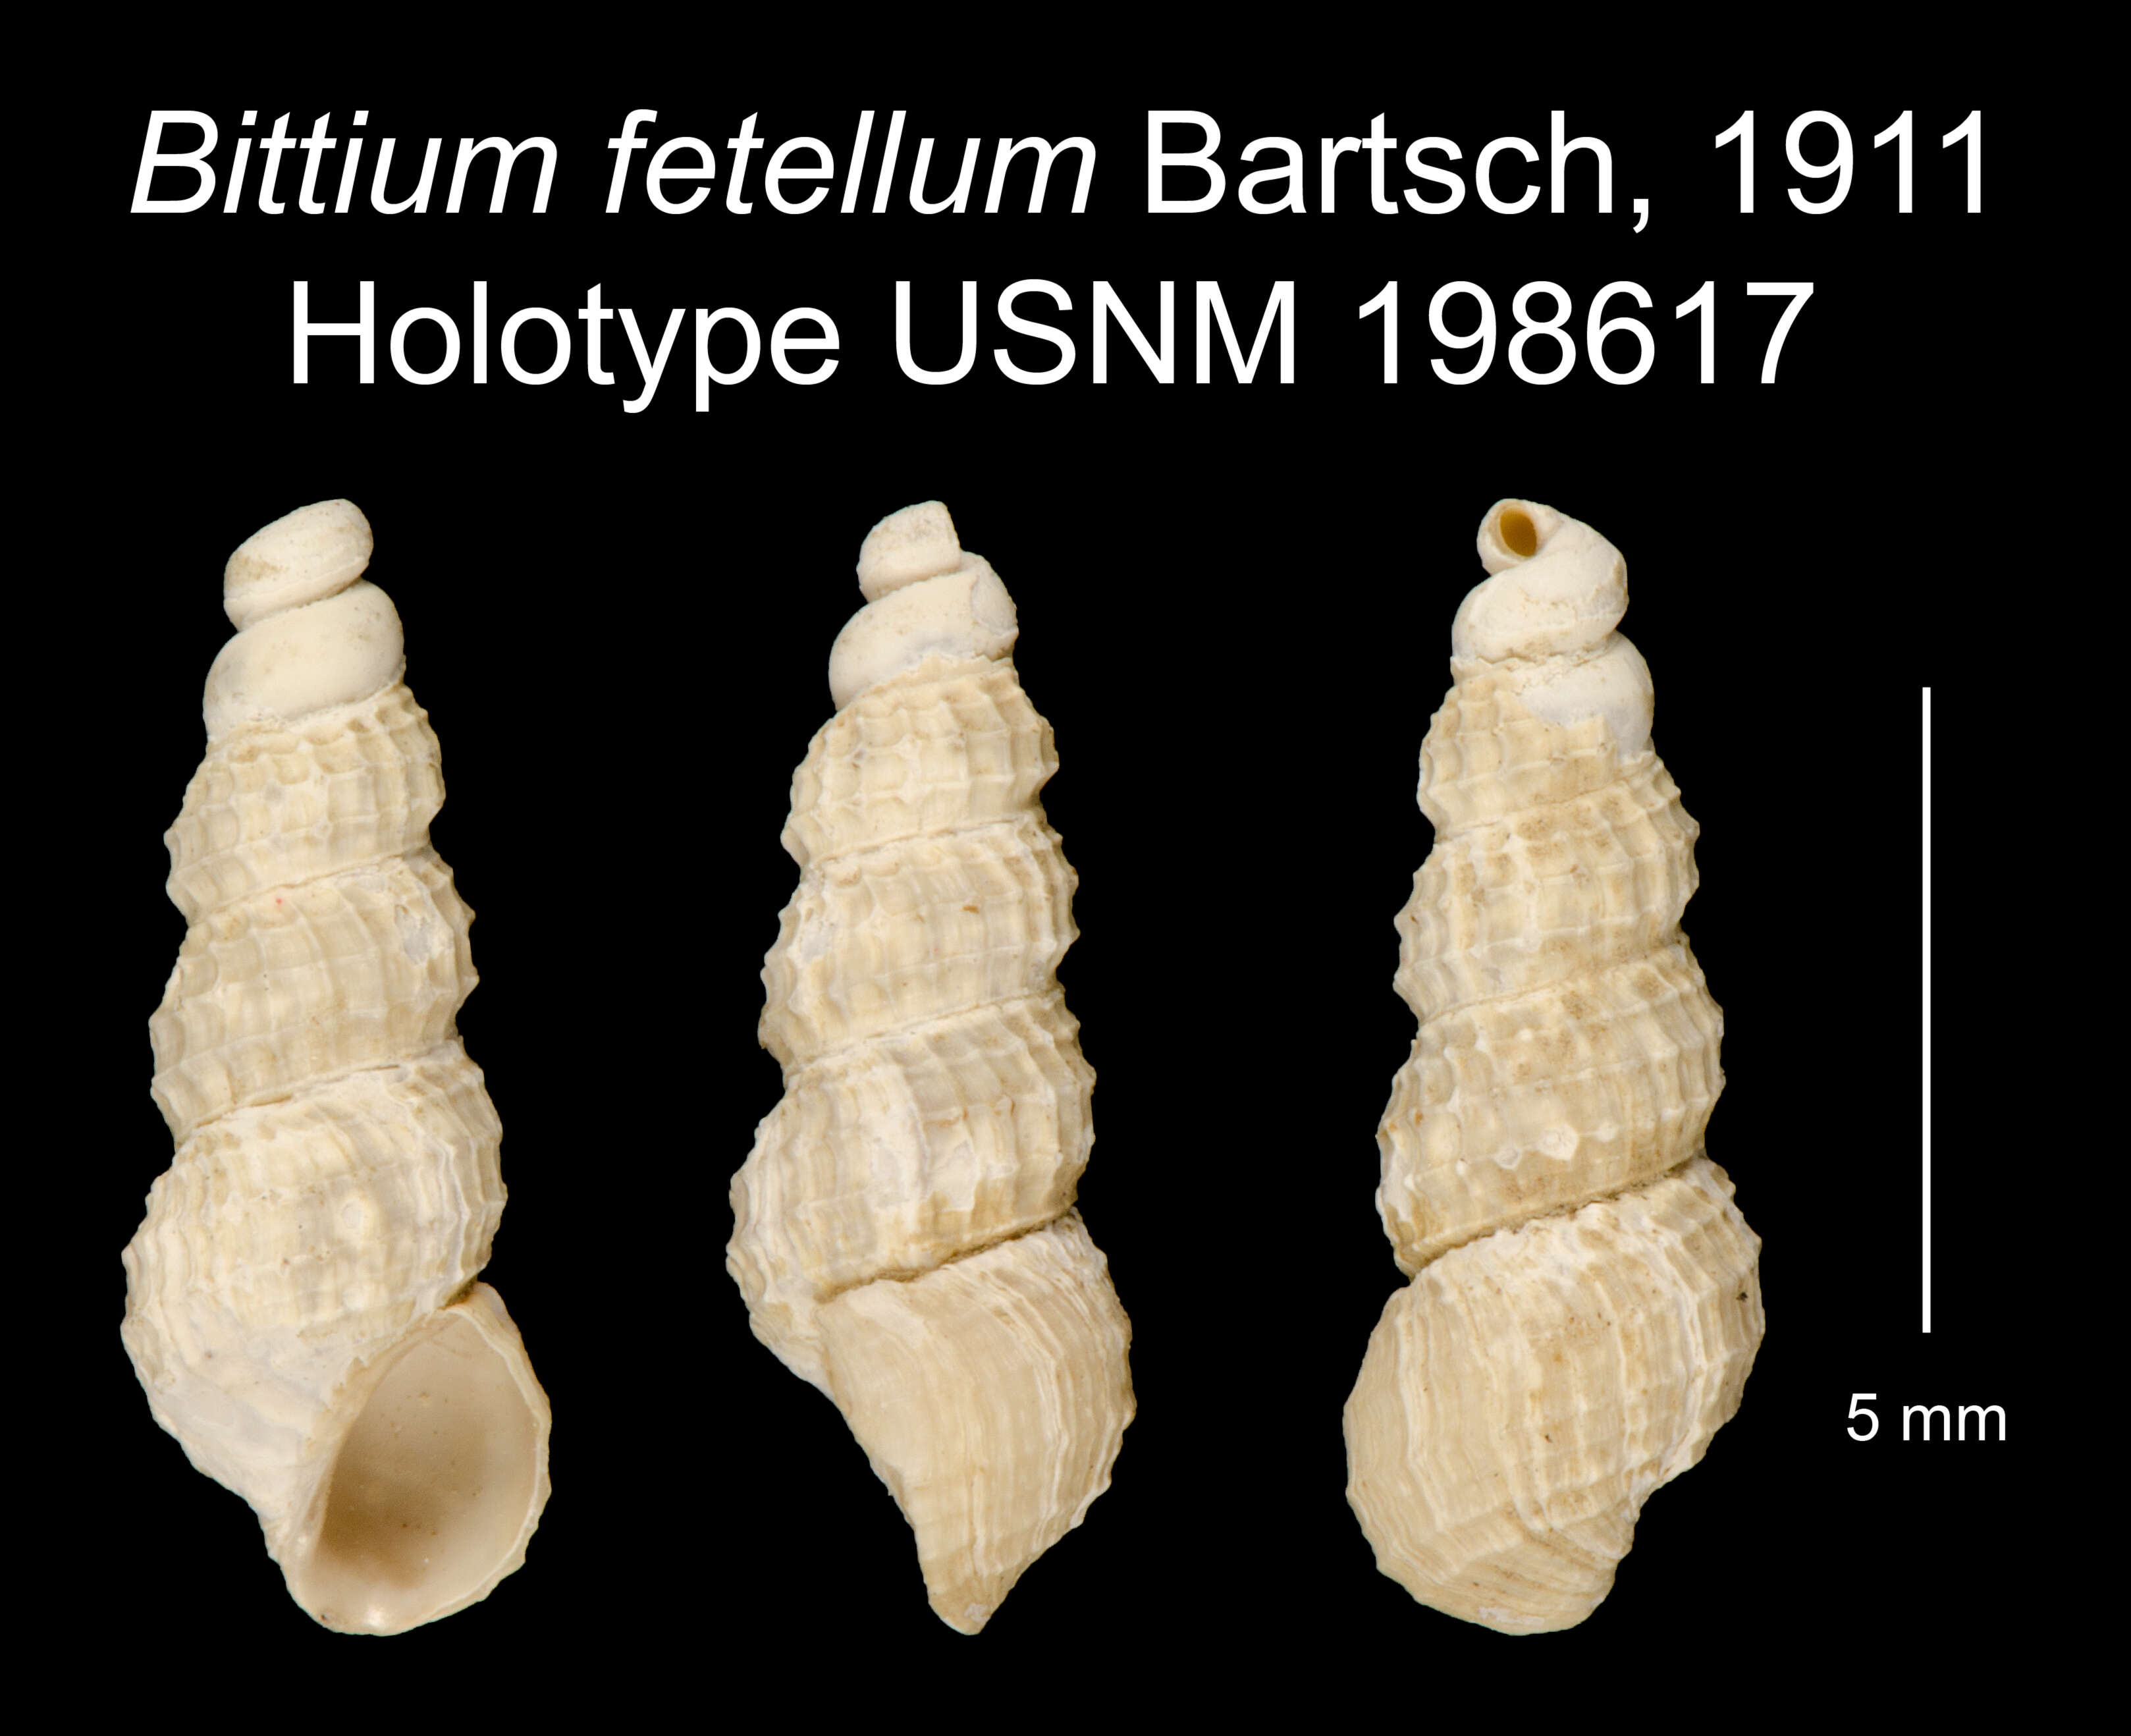 Image of Lirobittium fetellum (Bartsch 1911)